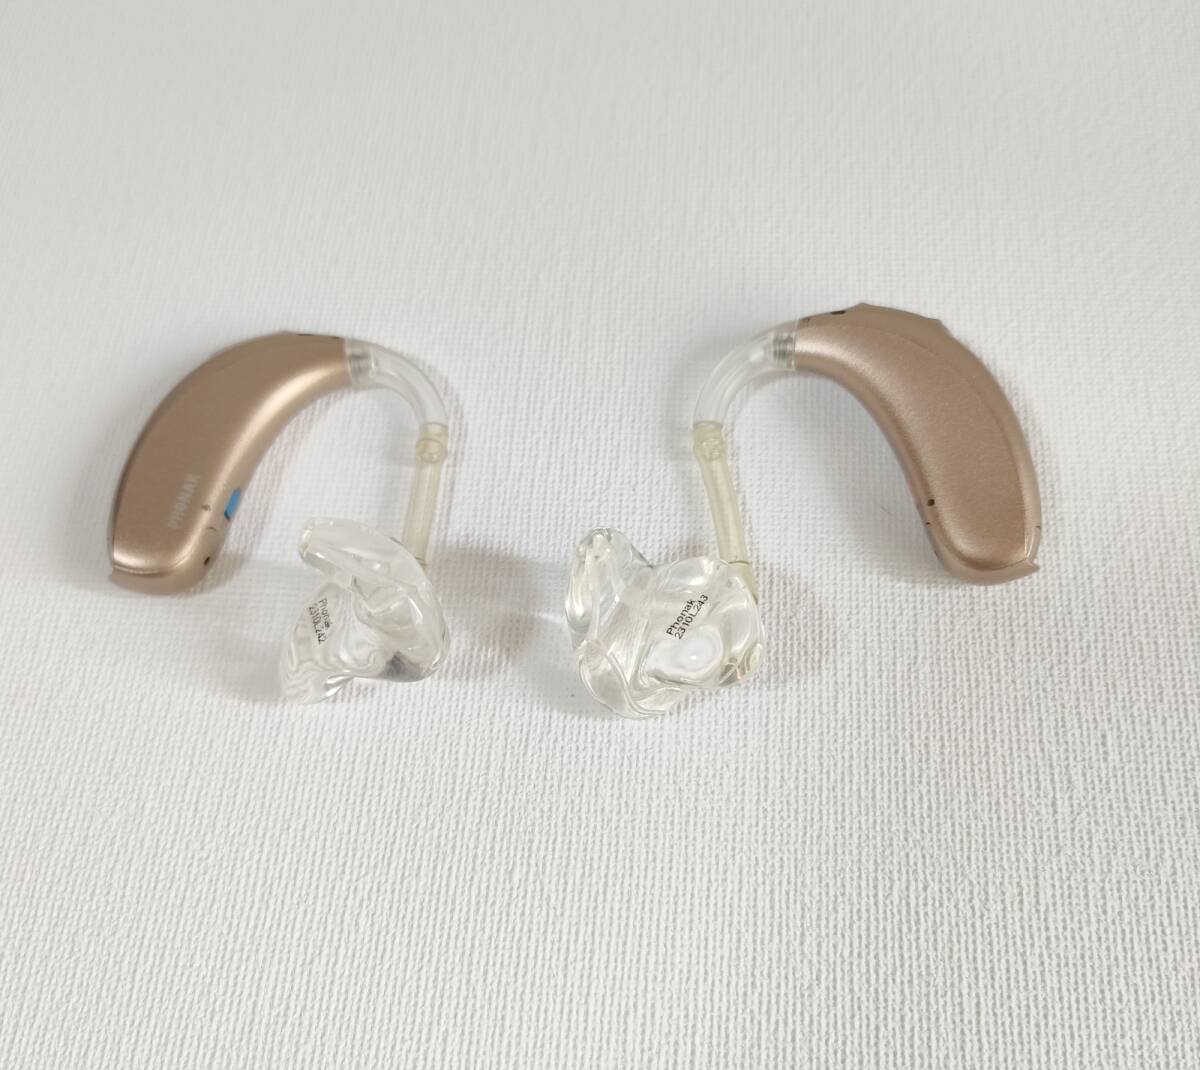  regular price 360000 jpy beautiful goods fonak hearing aid both ear nai-dama- bell M30 SP phonak naida marvel